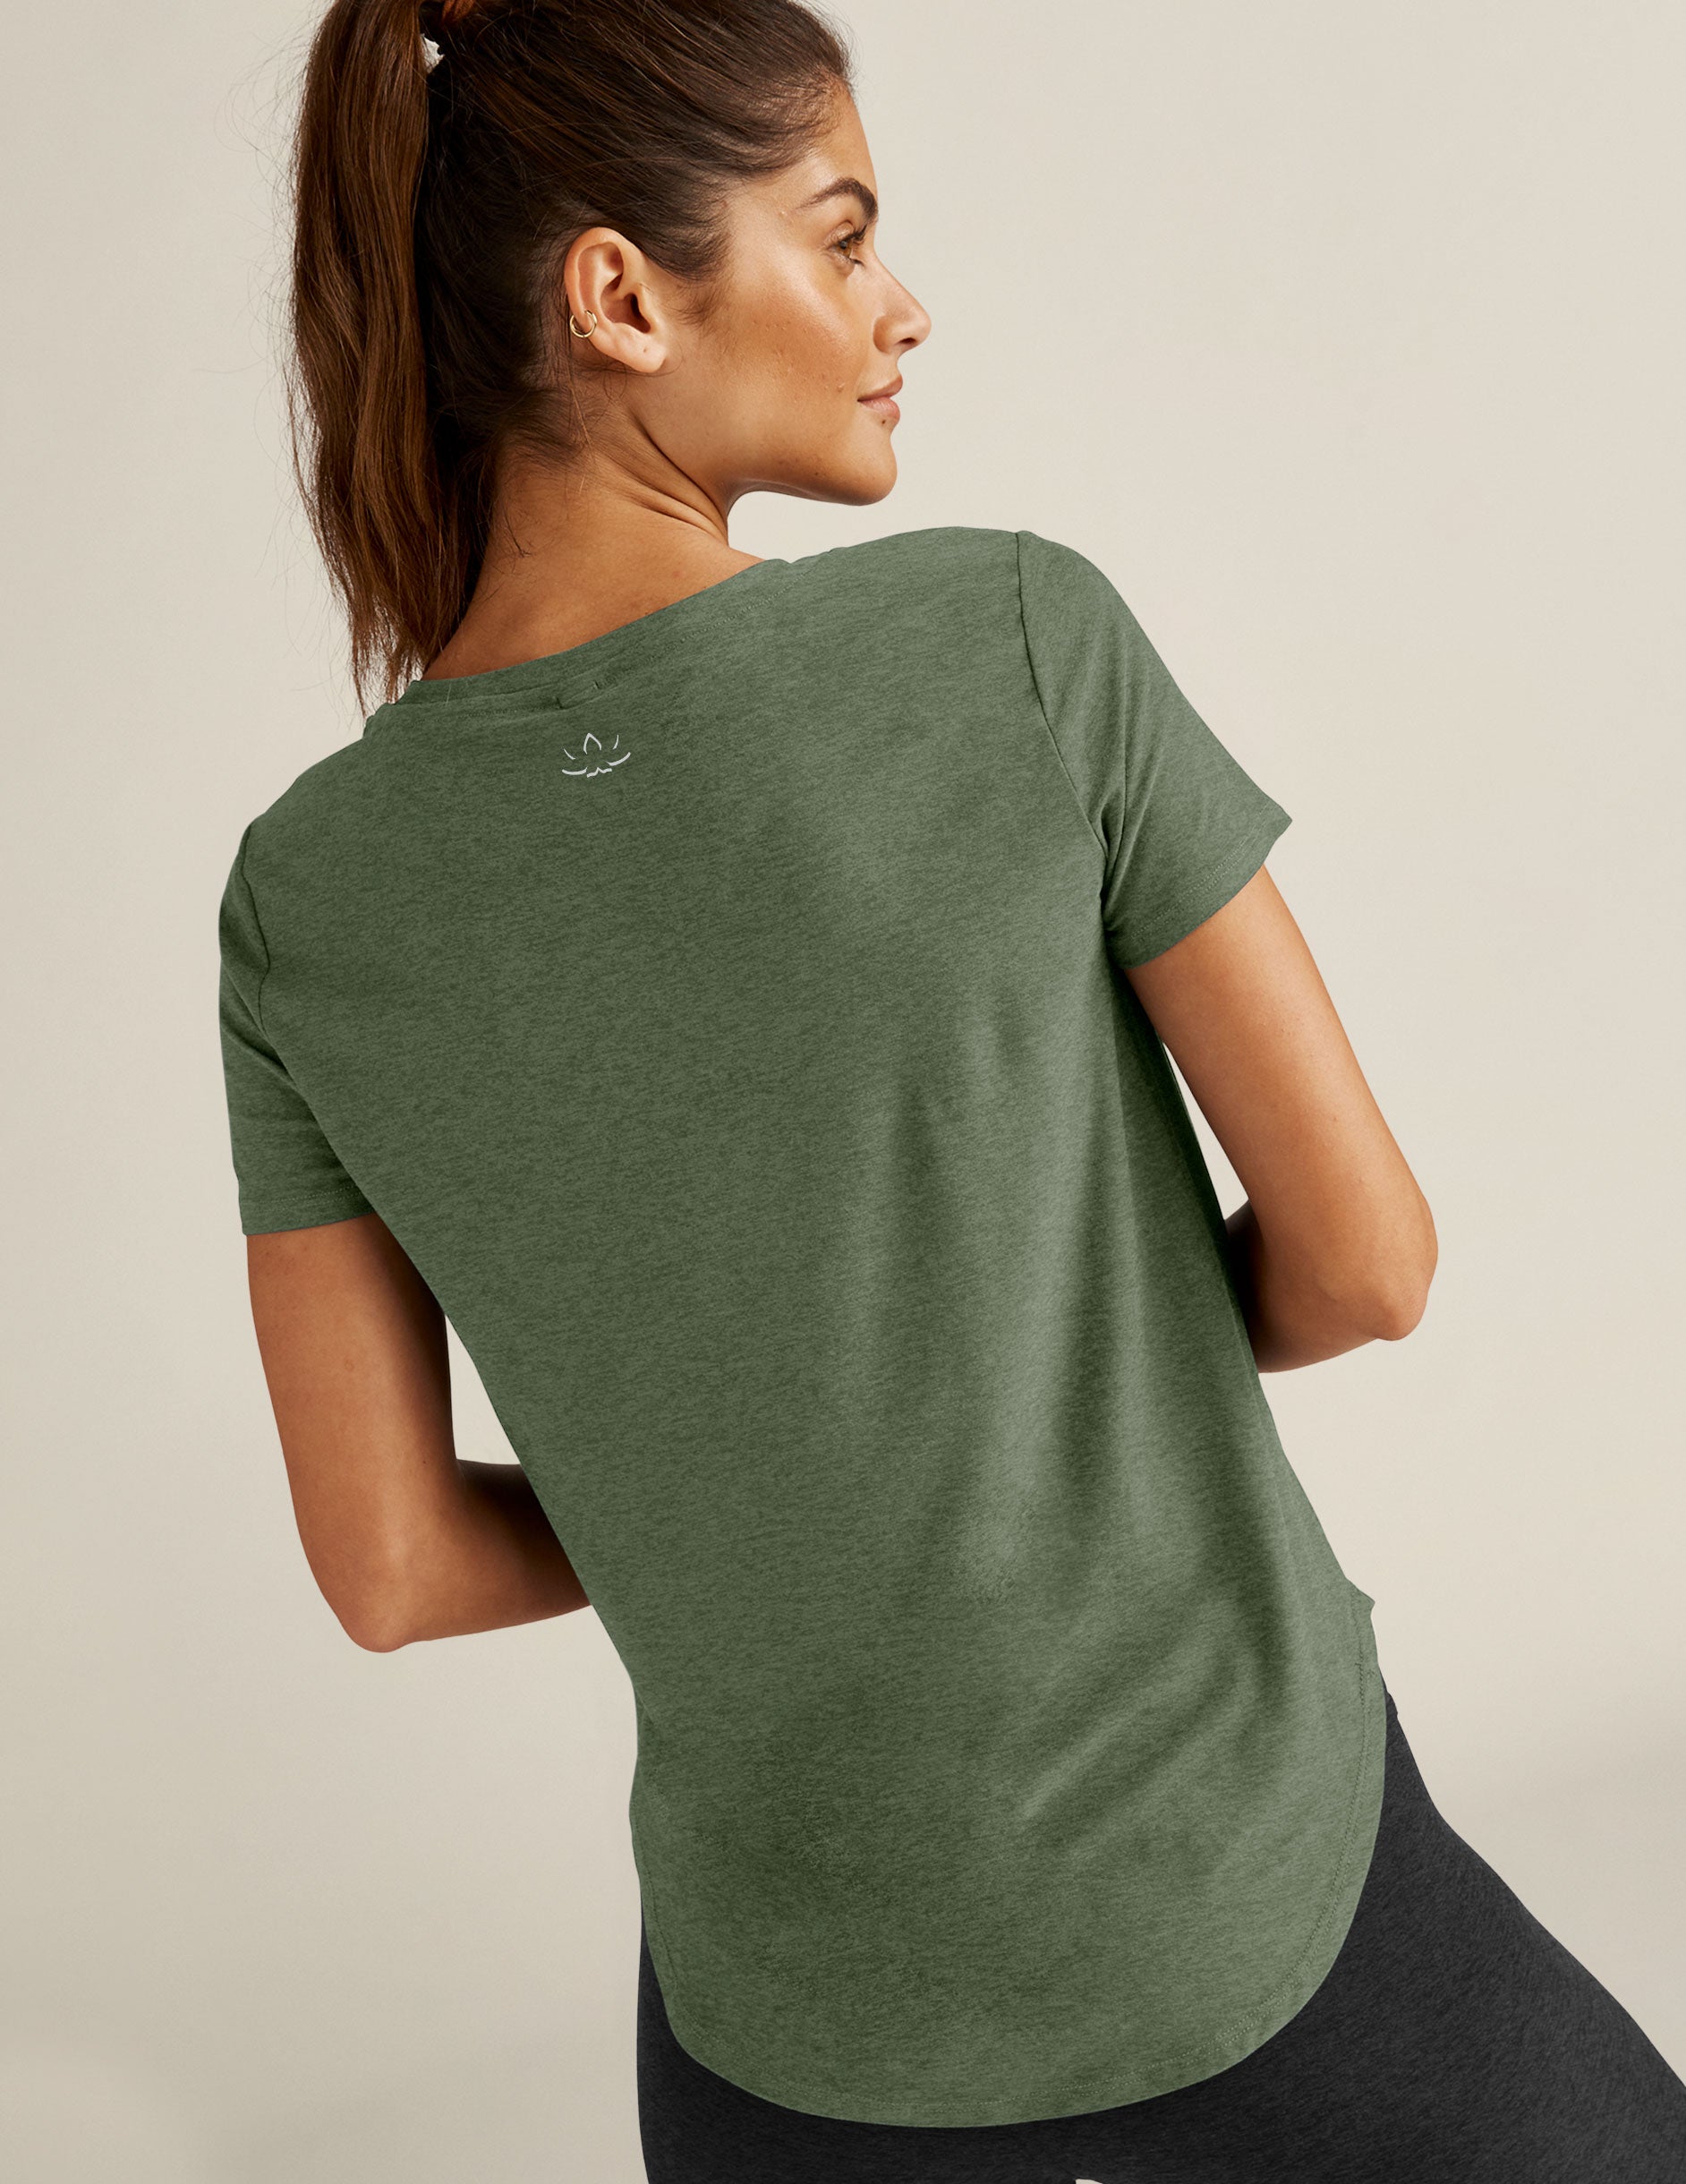 green scoop neck short sleeve t-shirt.